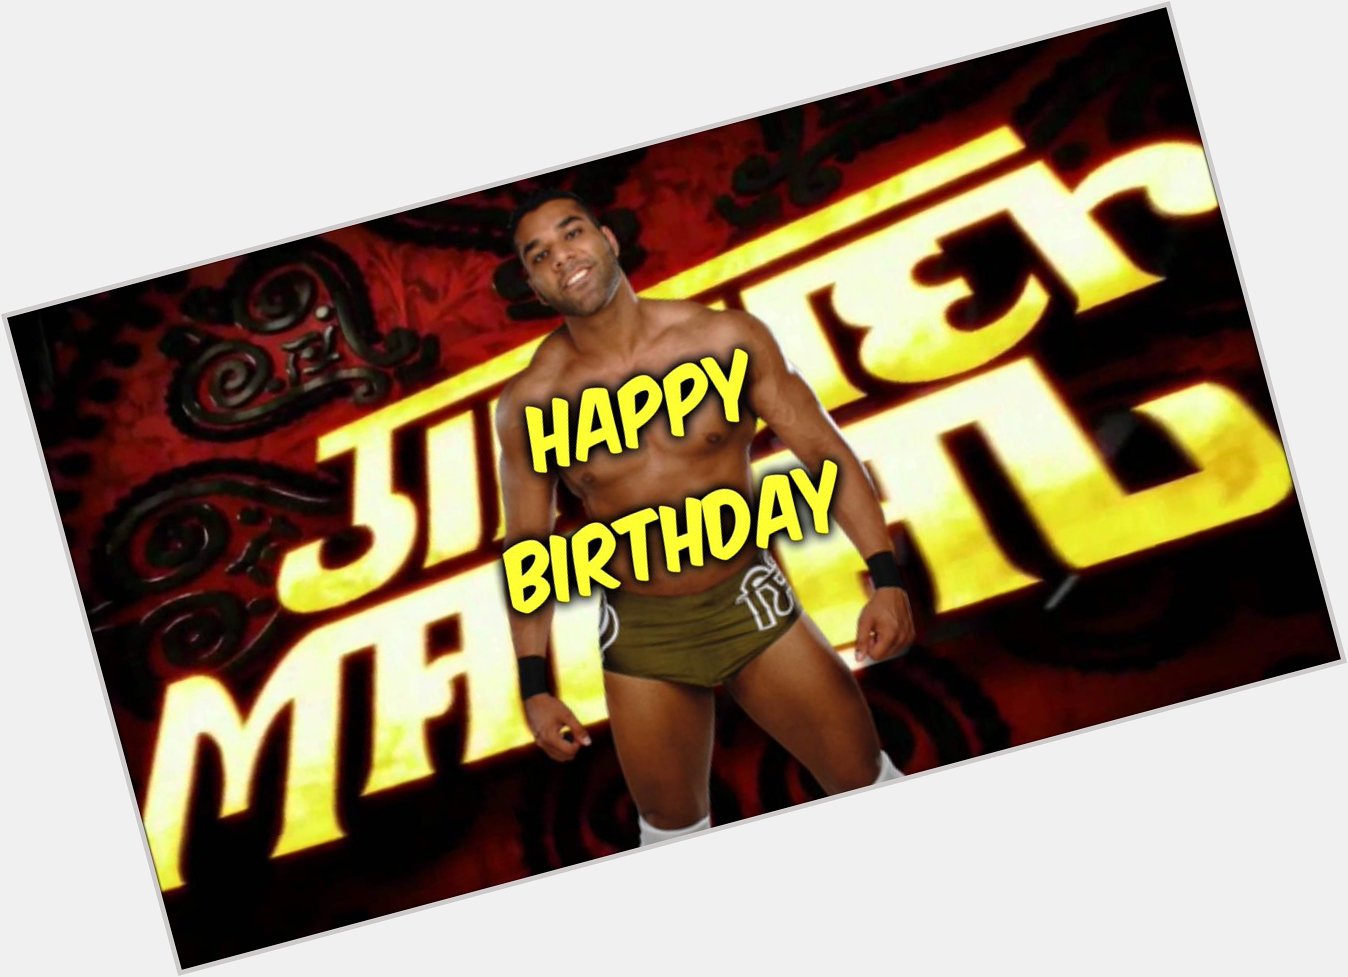  Happy Birthday Jinder Mahal !! 